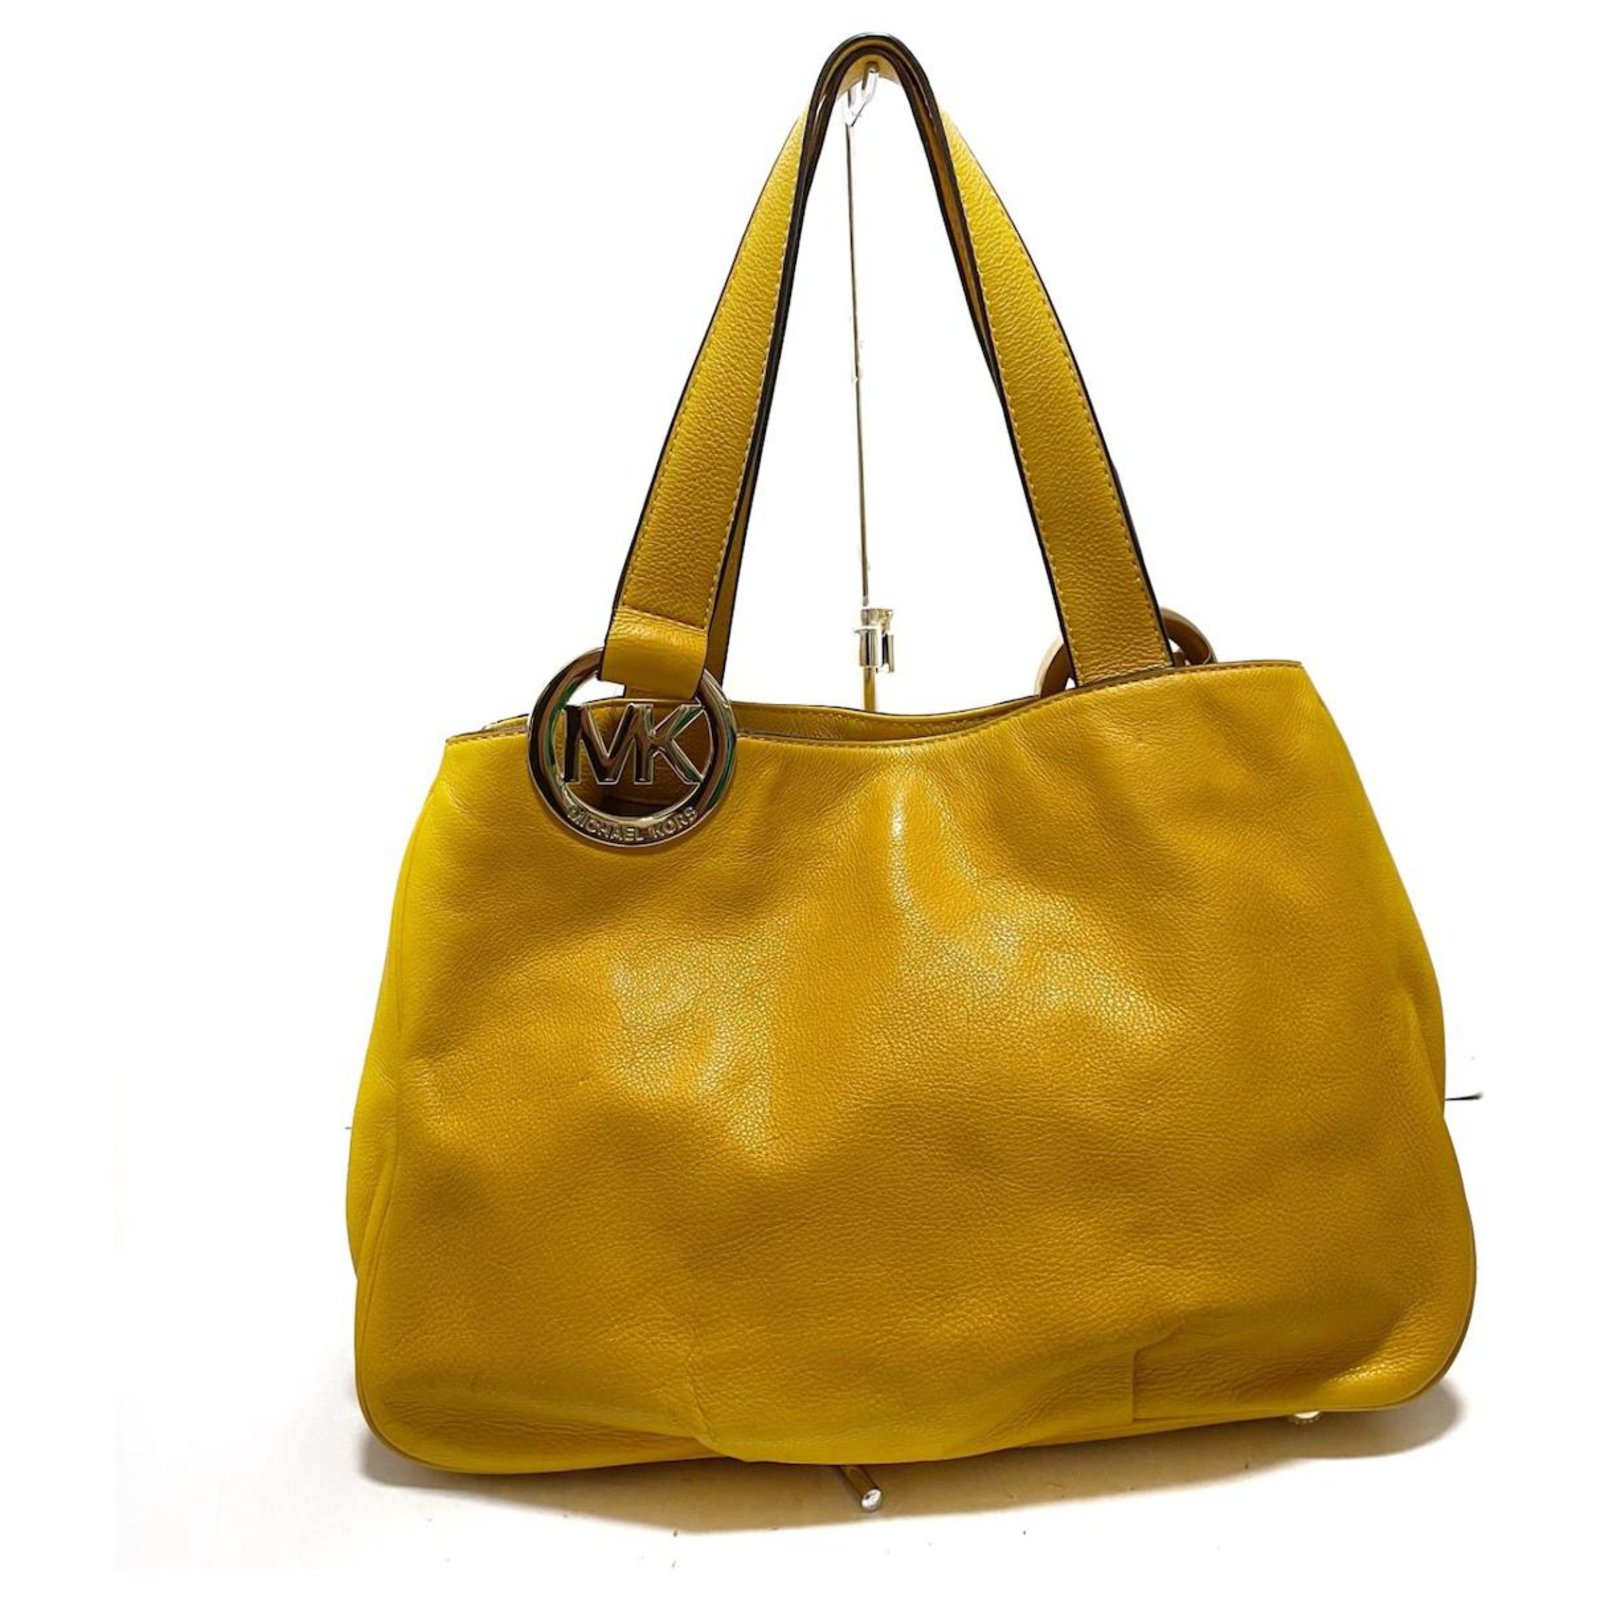 MICHAEL KORS 2 WAY YELLOW BAG 227001236  Womens Fashion Bags  Wallets  Crossbody Bags on Carousell